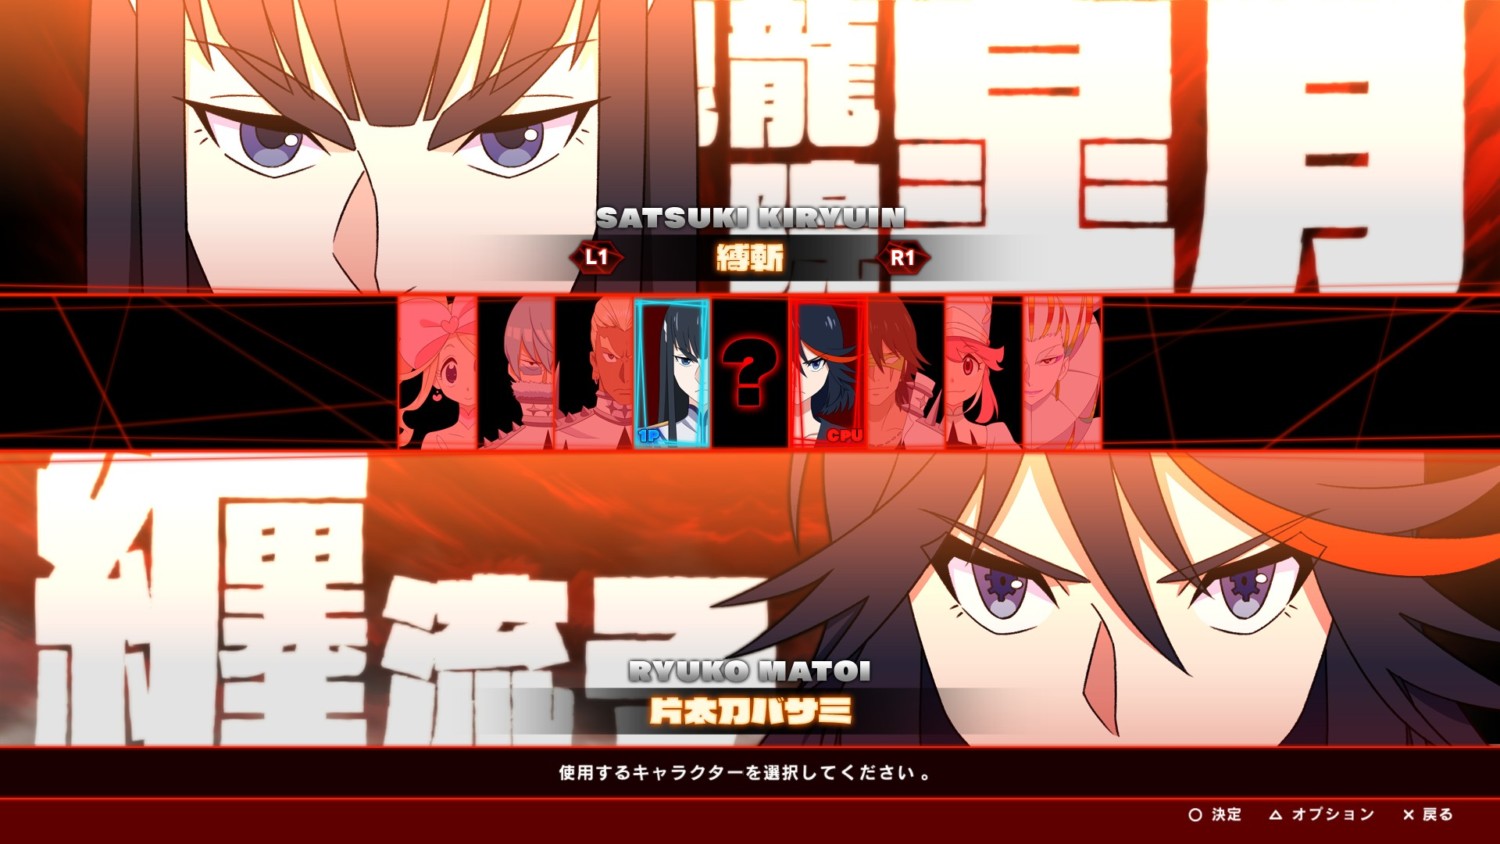 Stream Death Game Anime on HIDIVE